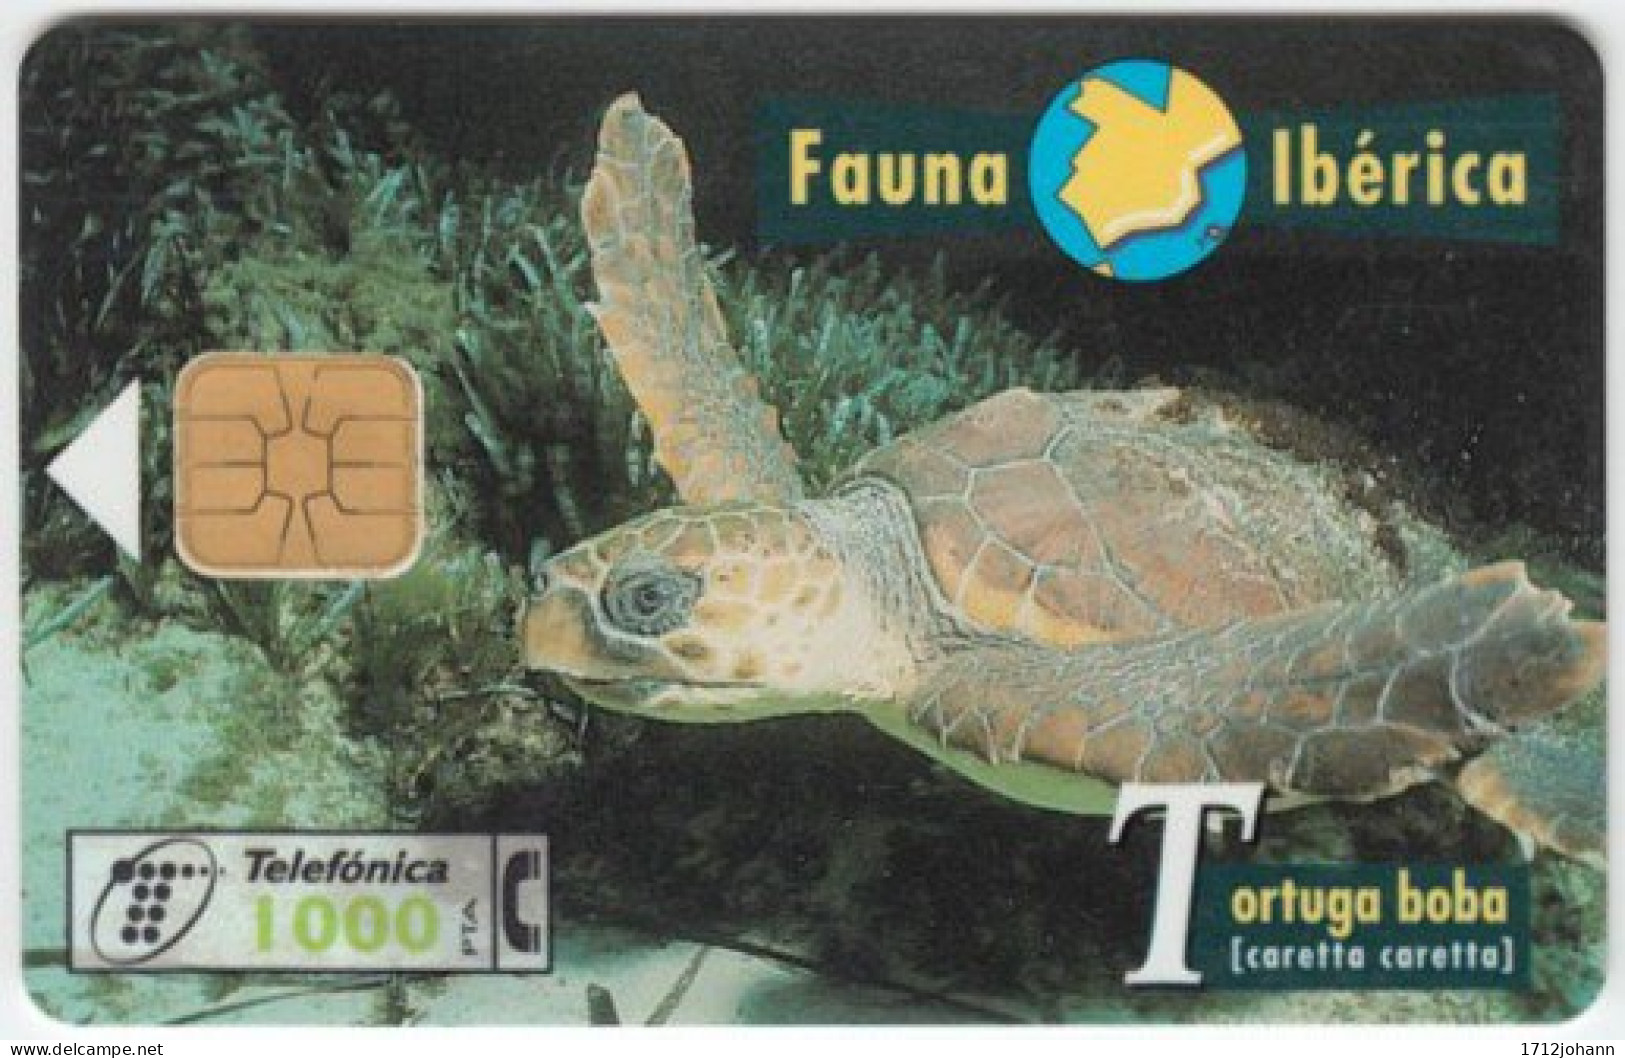 SPAIN A-526 Chip CabiTel - Animal, Sea Life, Turtle - Used - Basisuitgaven